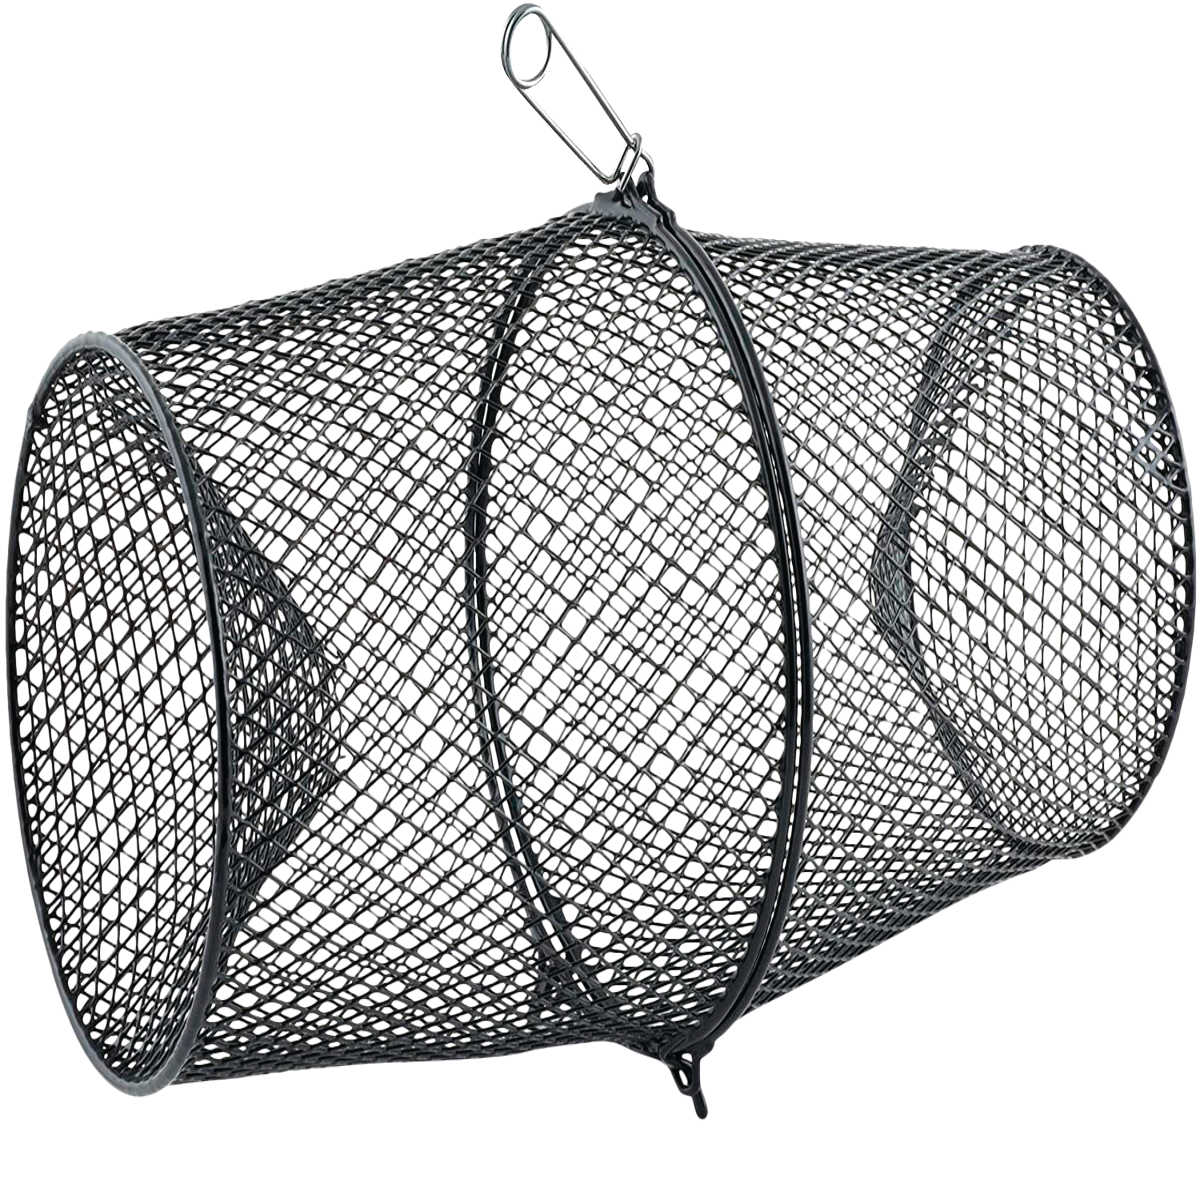 Fish Baskets, Nets & Stringers